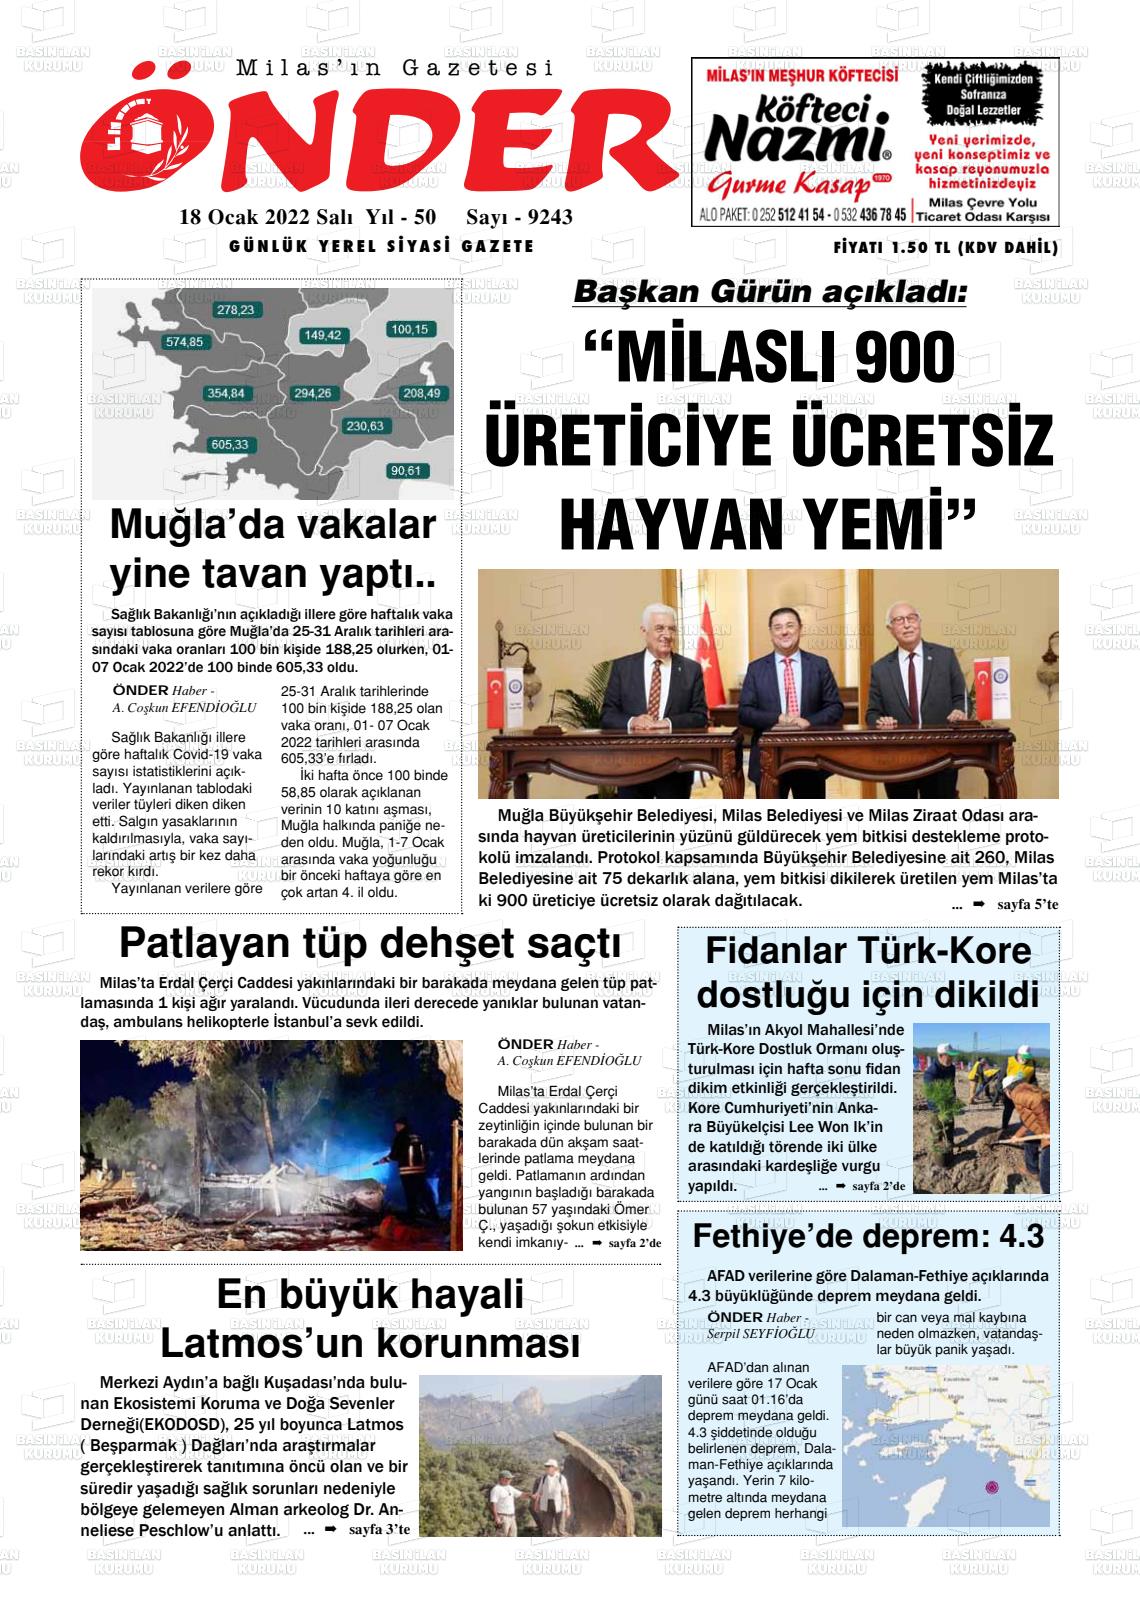 18 Ocak 2022 Milas Önder Gazete Manşeti